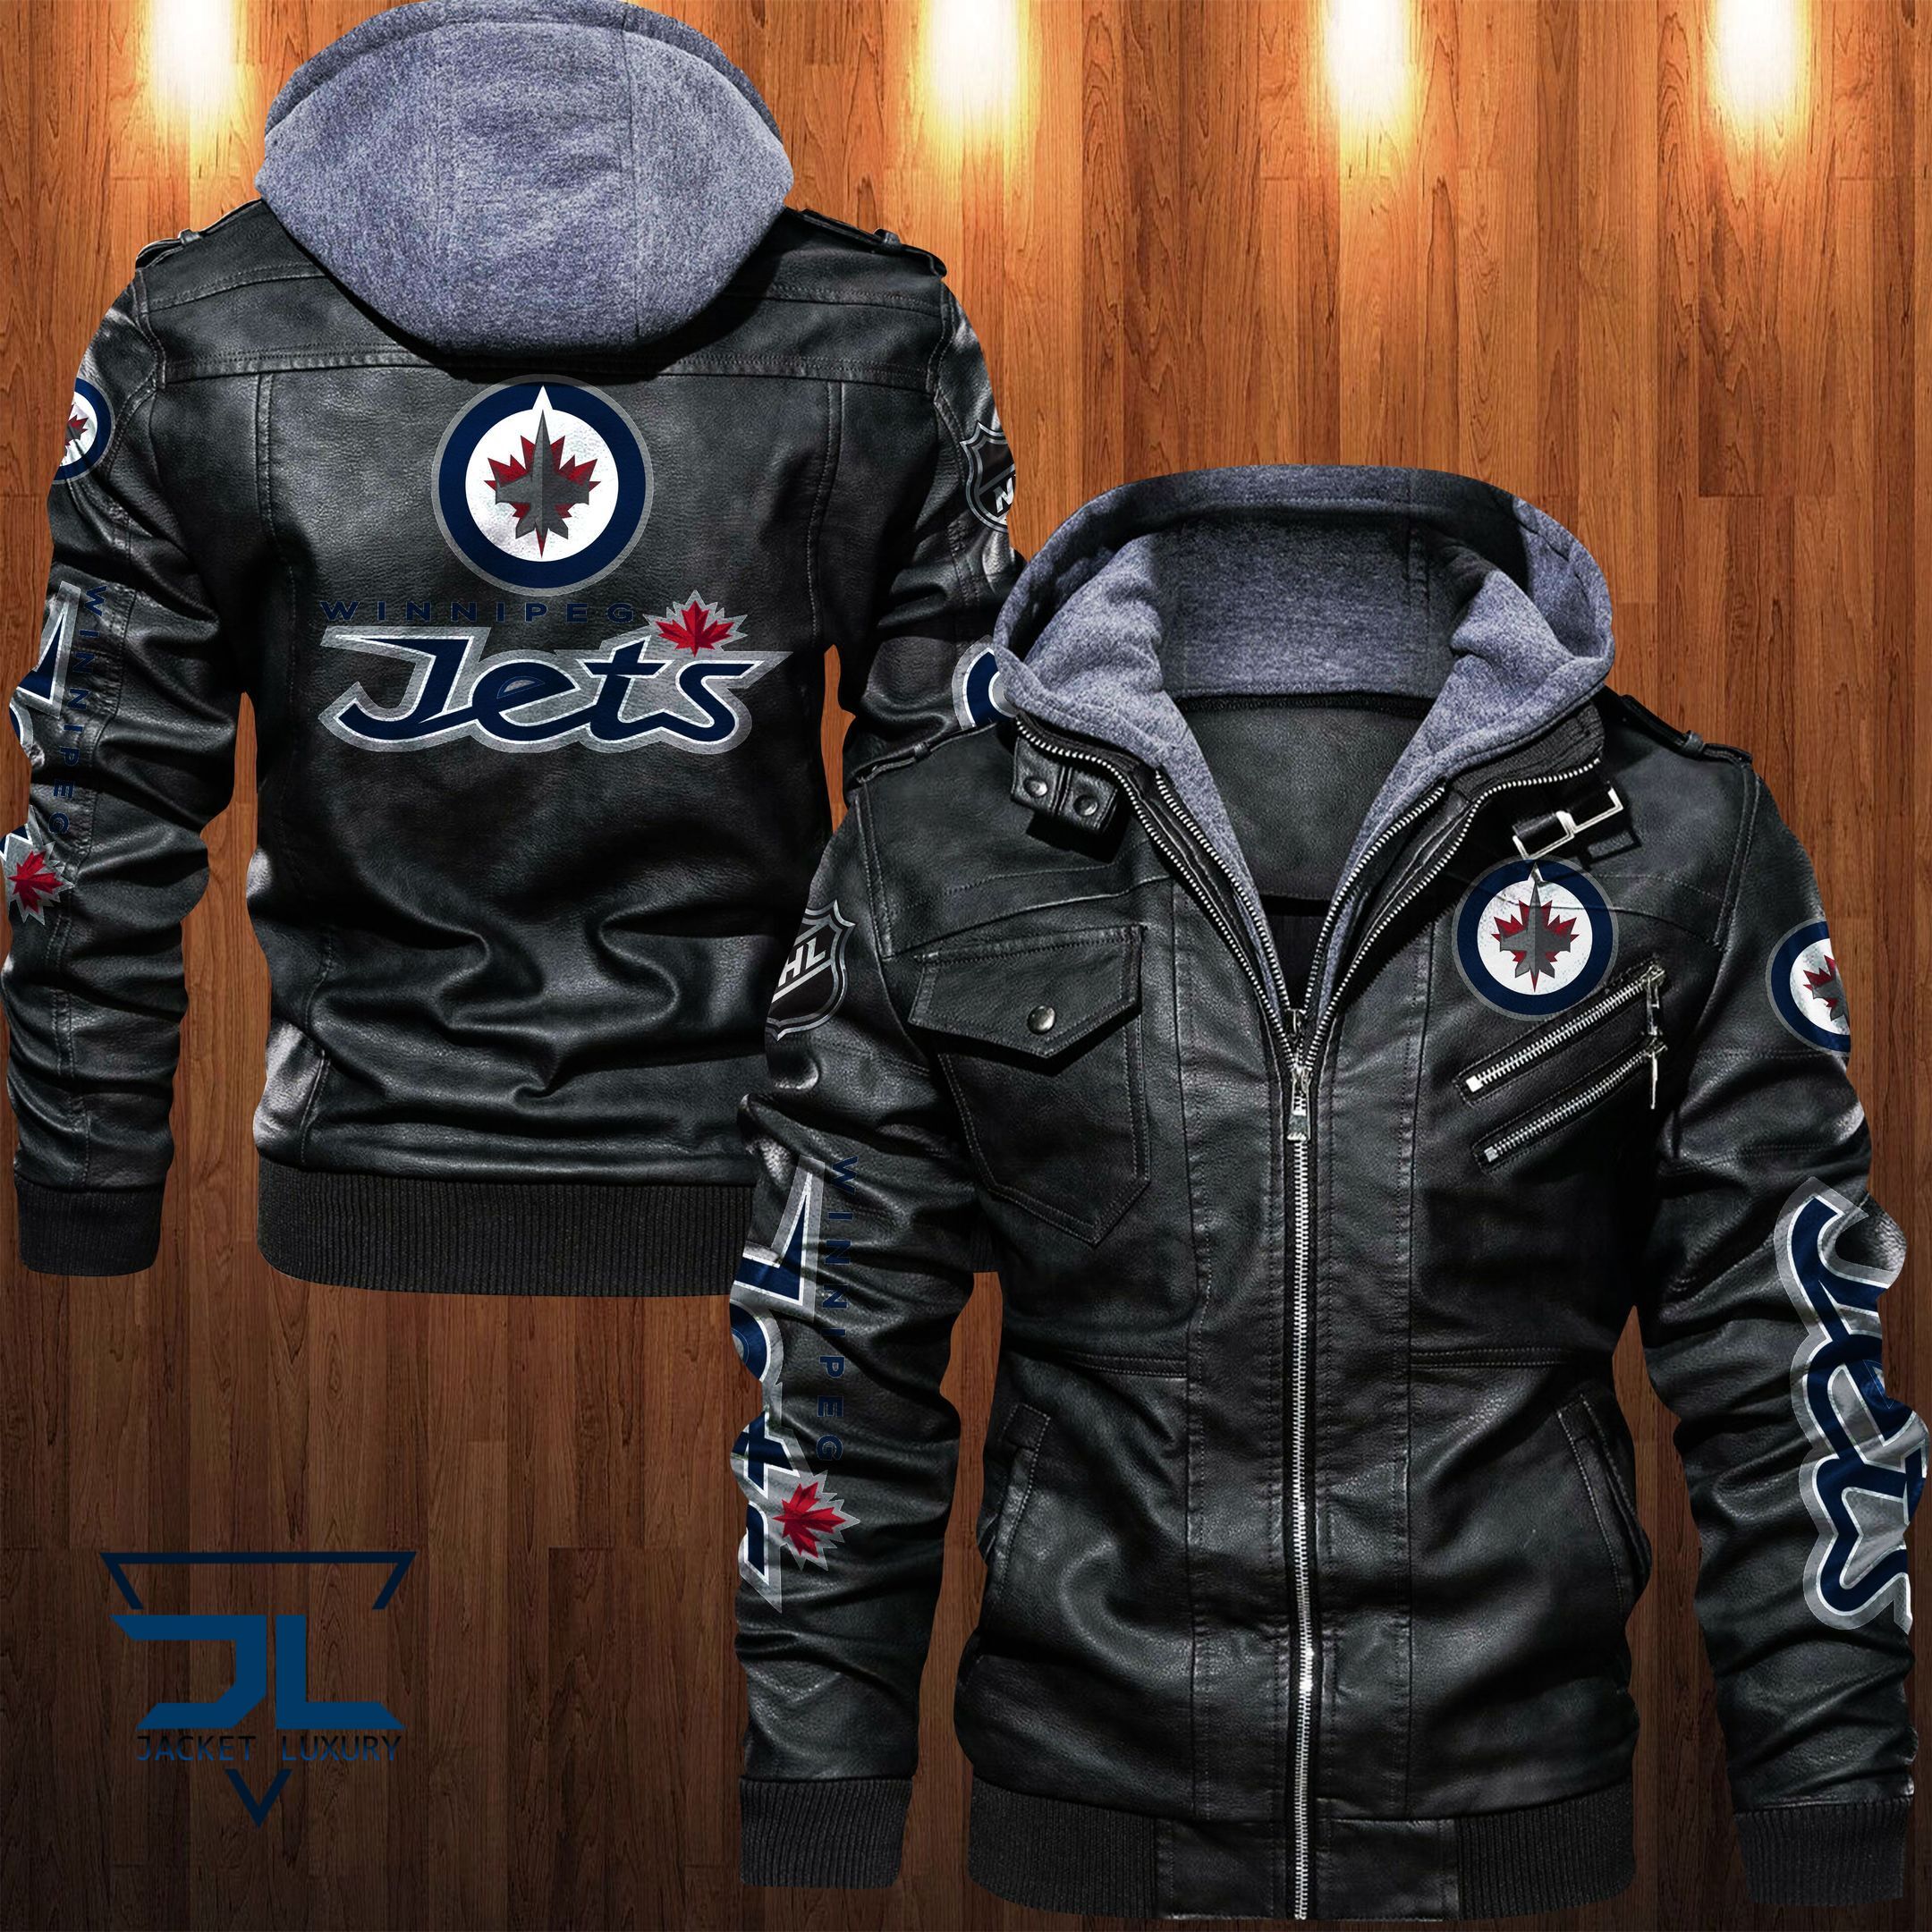 What Leather jacket Sells Best on Techcomshop? 195